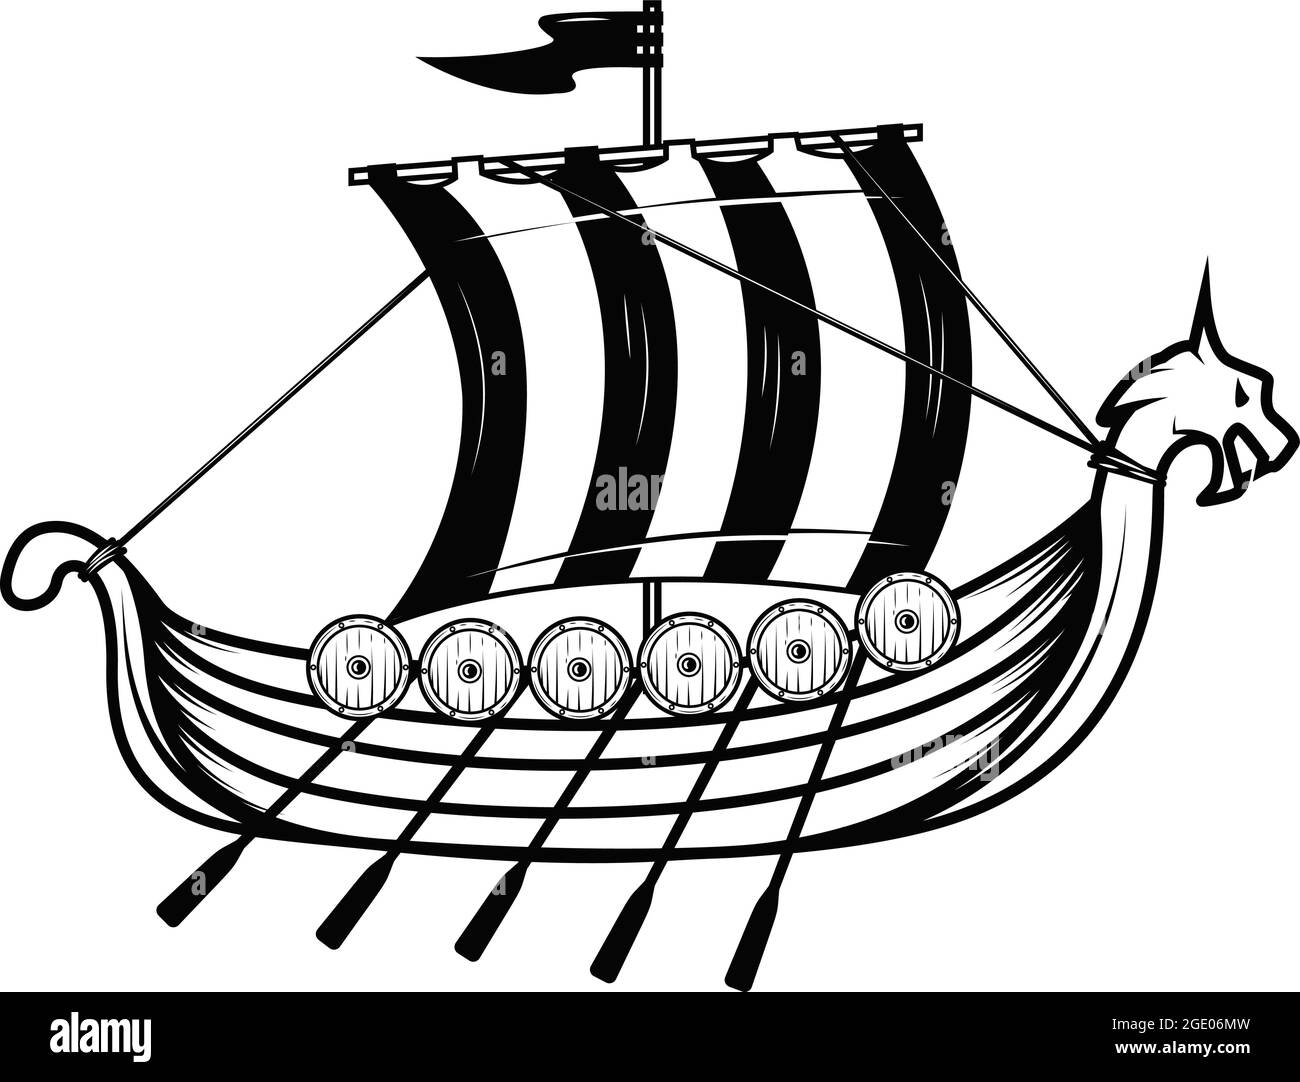 Vikings ship. Drakkar. Design element for poster, emblem, sign, logo. Vector illustration Stock Vector